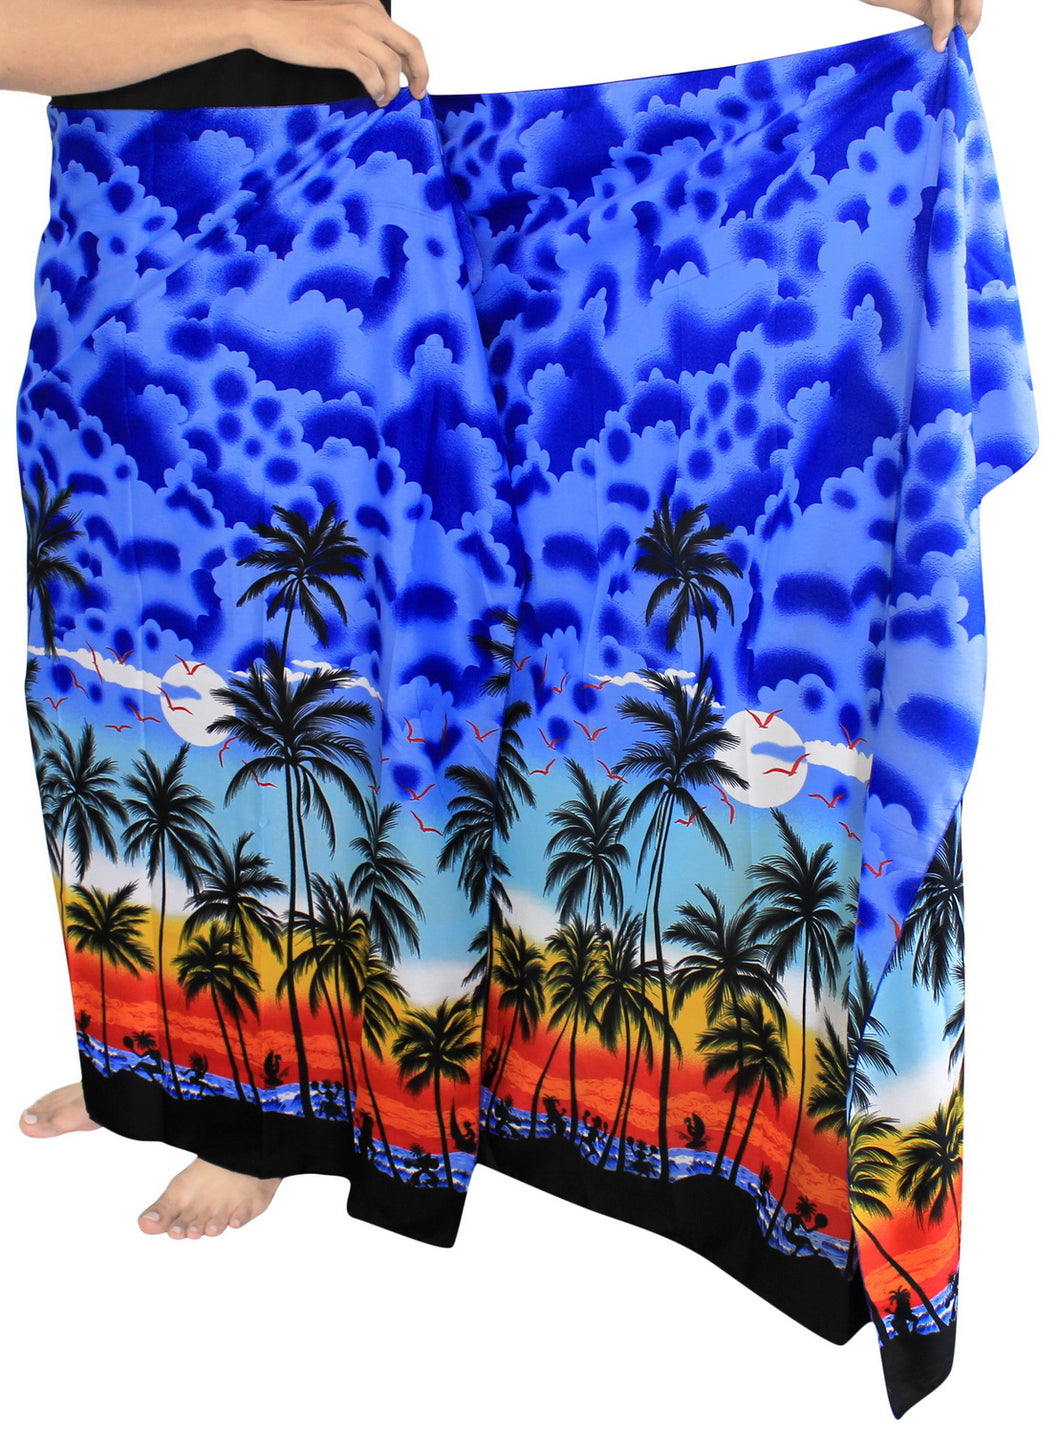 la-leela-men-sarong-soft-light-printed-swimsuit-pareo-towel-boys-72x42-royal-blue_3075